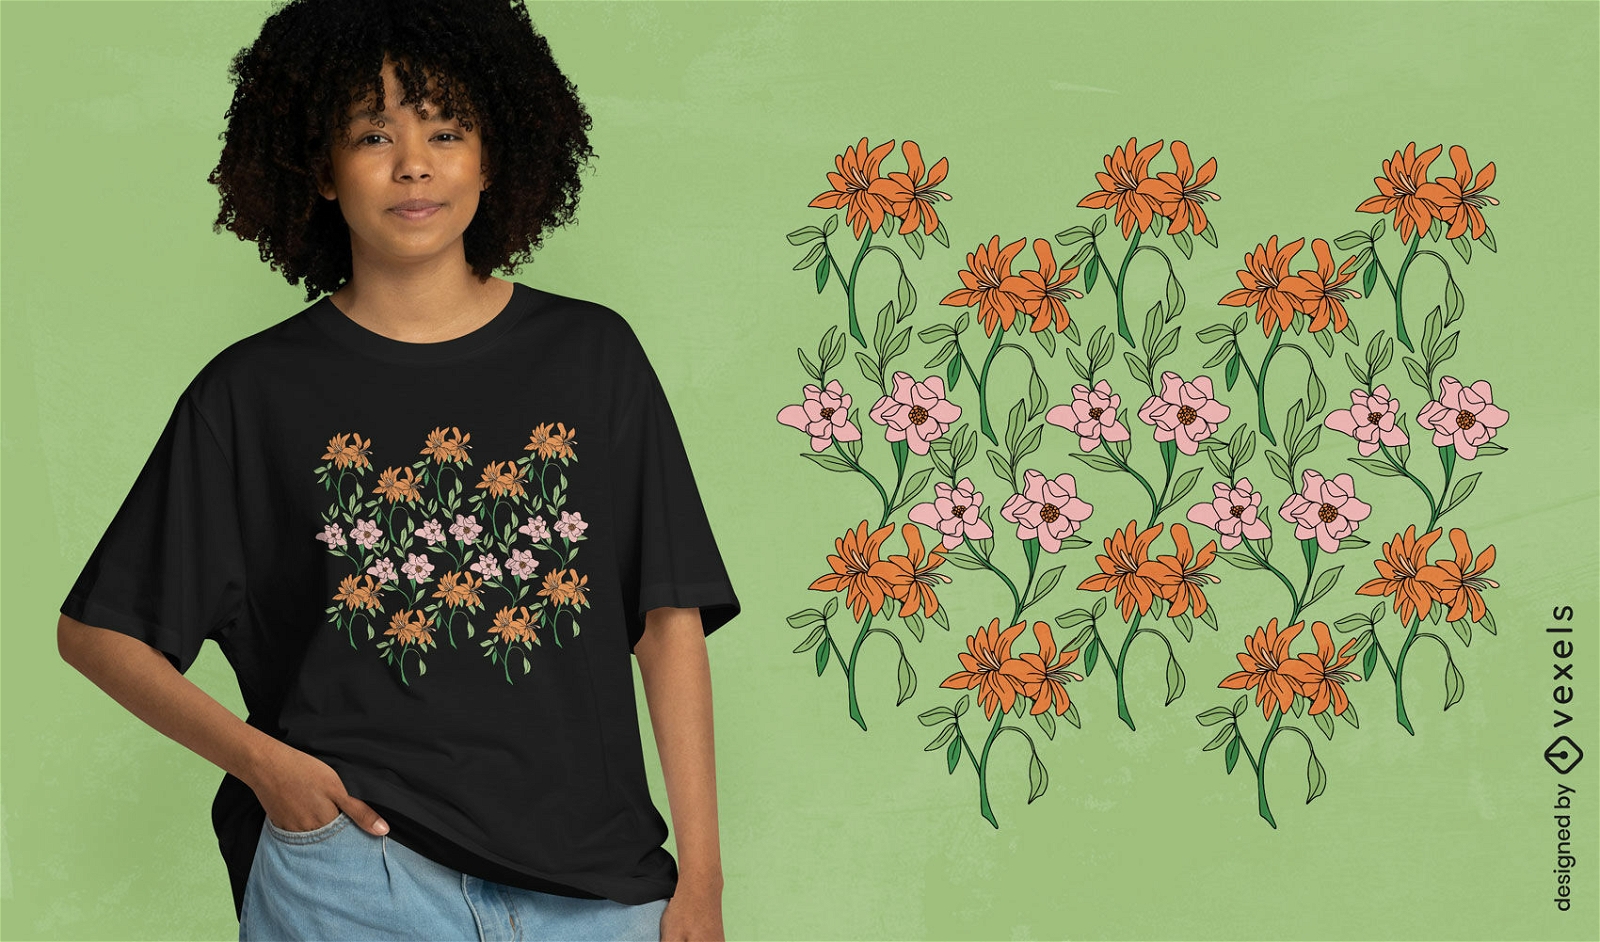 Retro flowers pattern t-shirt design